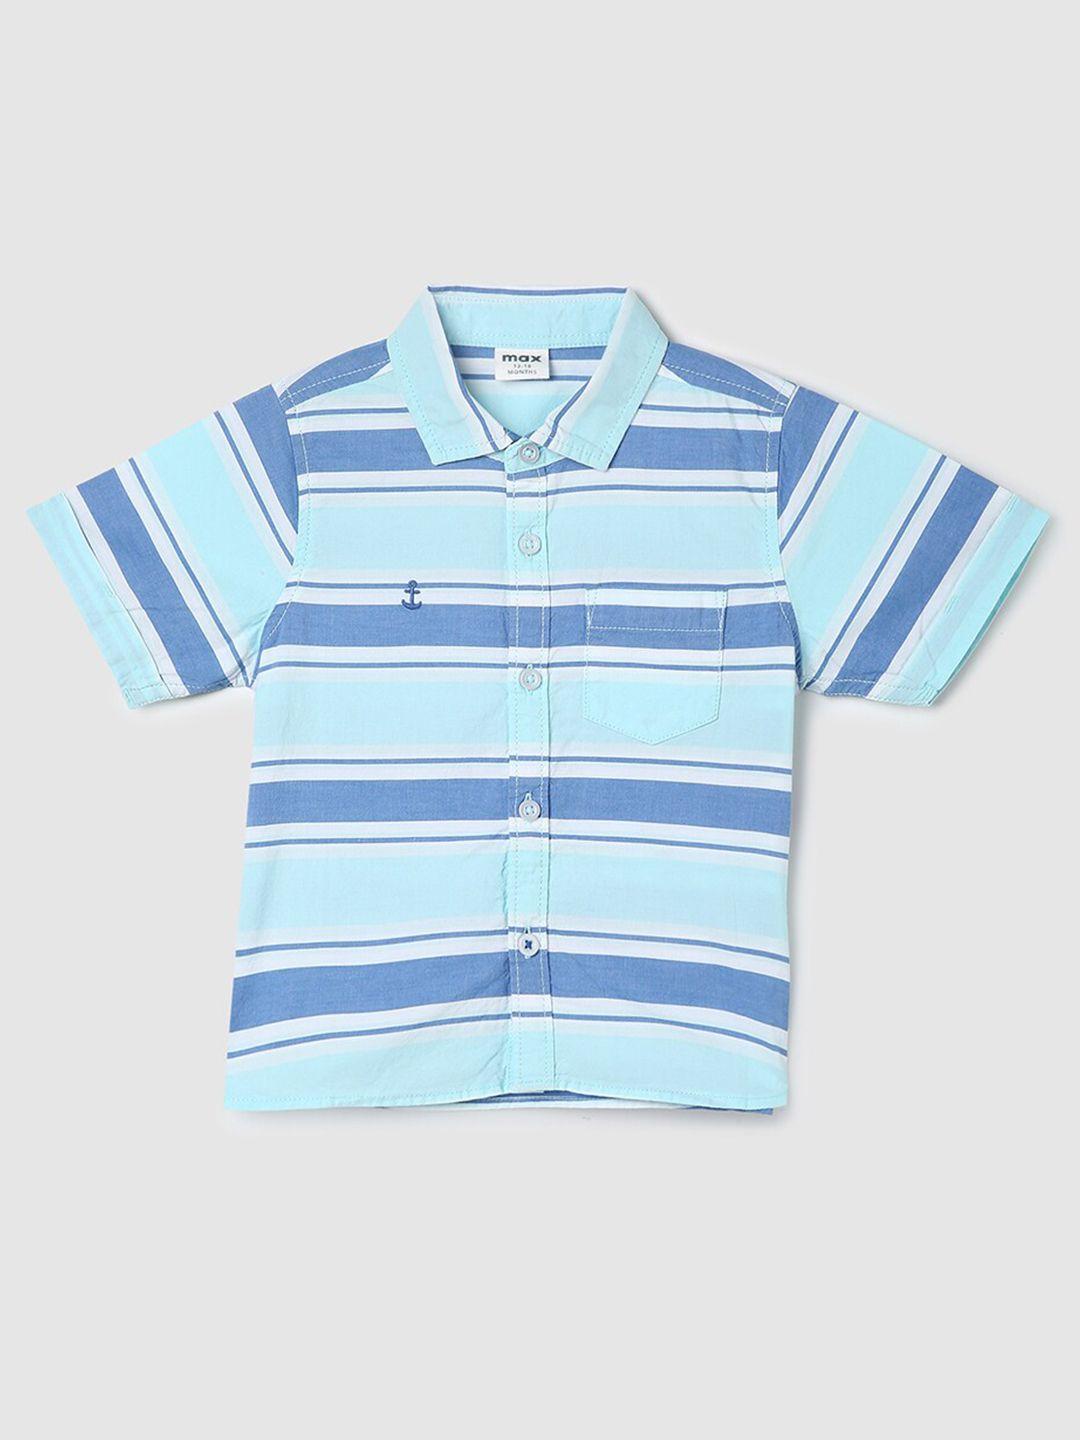 max boys horizontal stripes striped pure cotton casual shirt